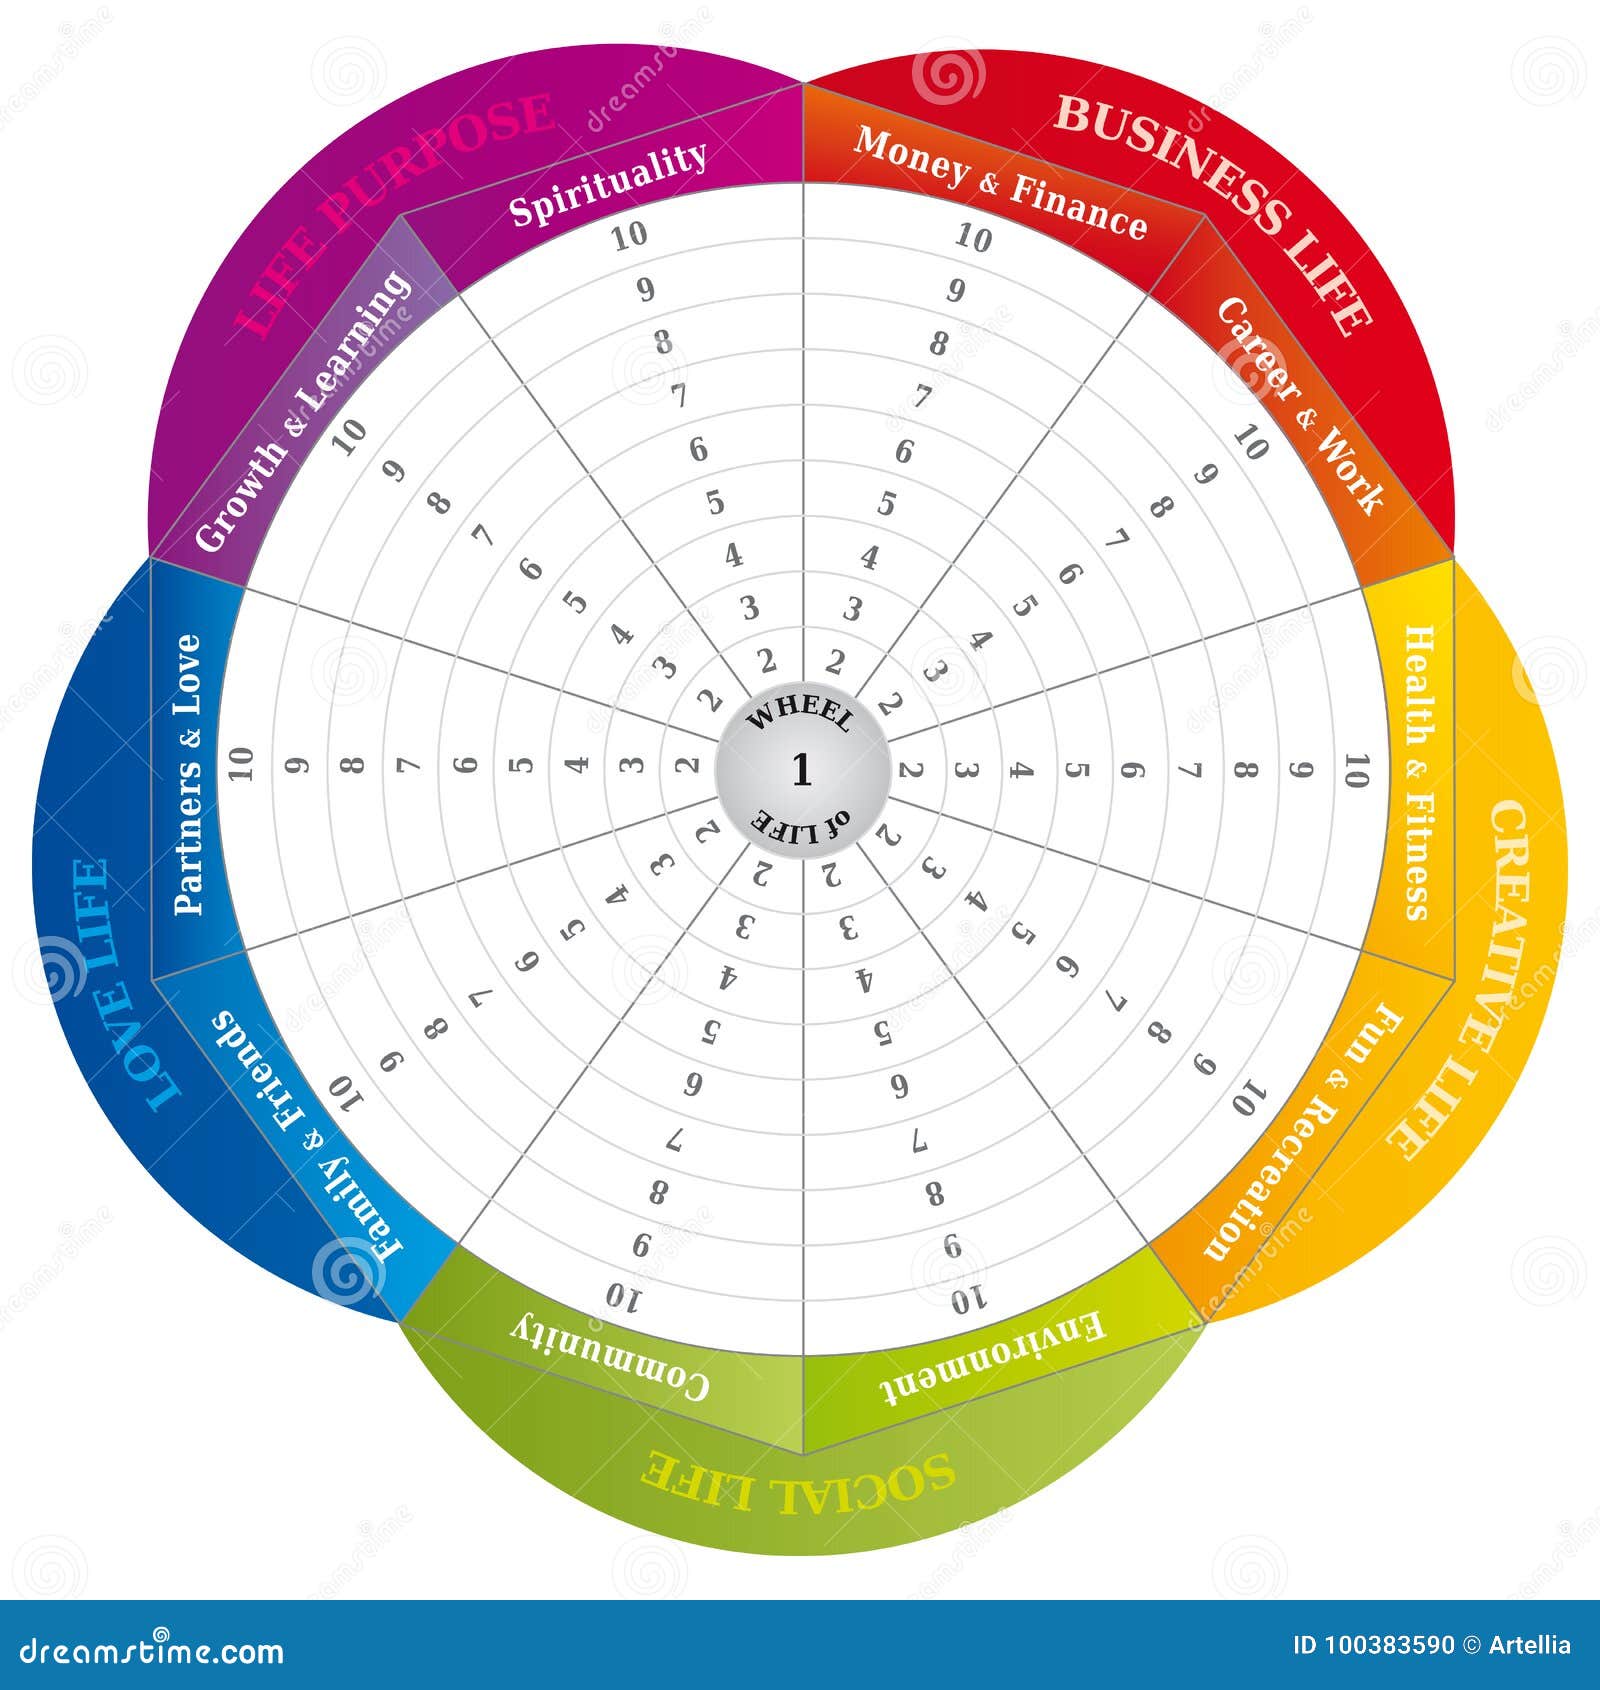 wheel of life - diagram - coaching tool in rainbow colors